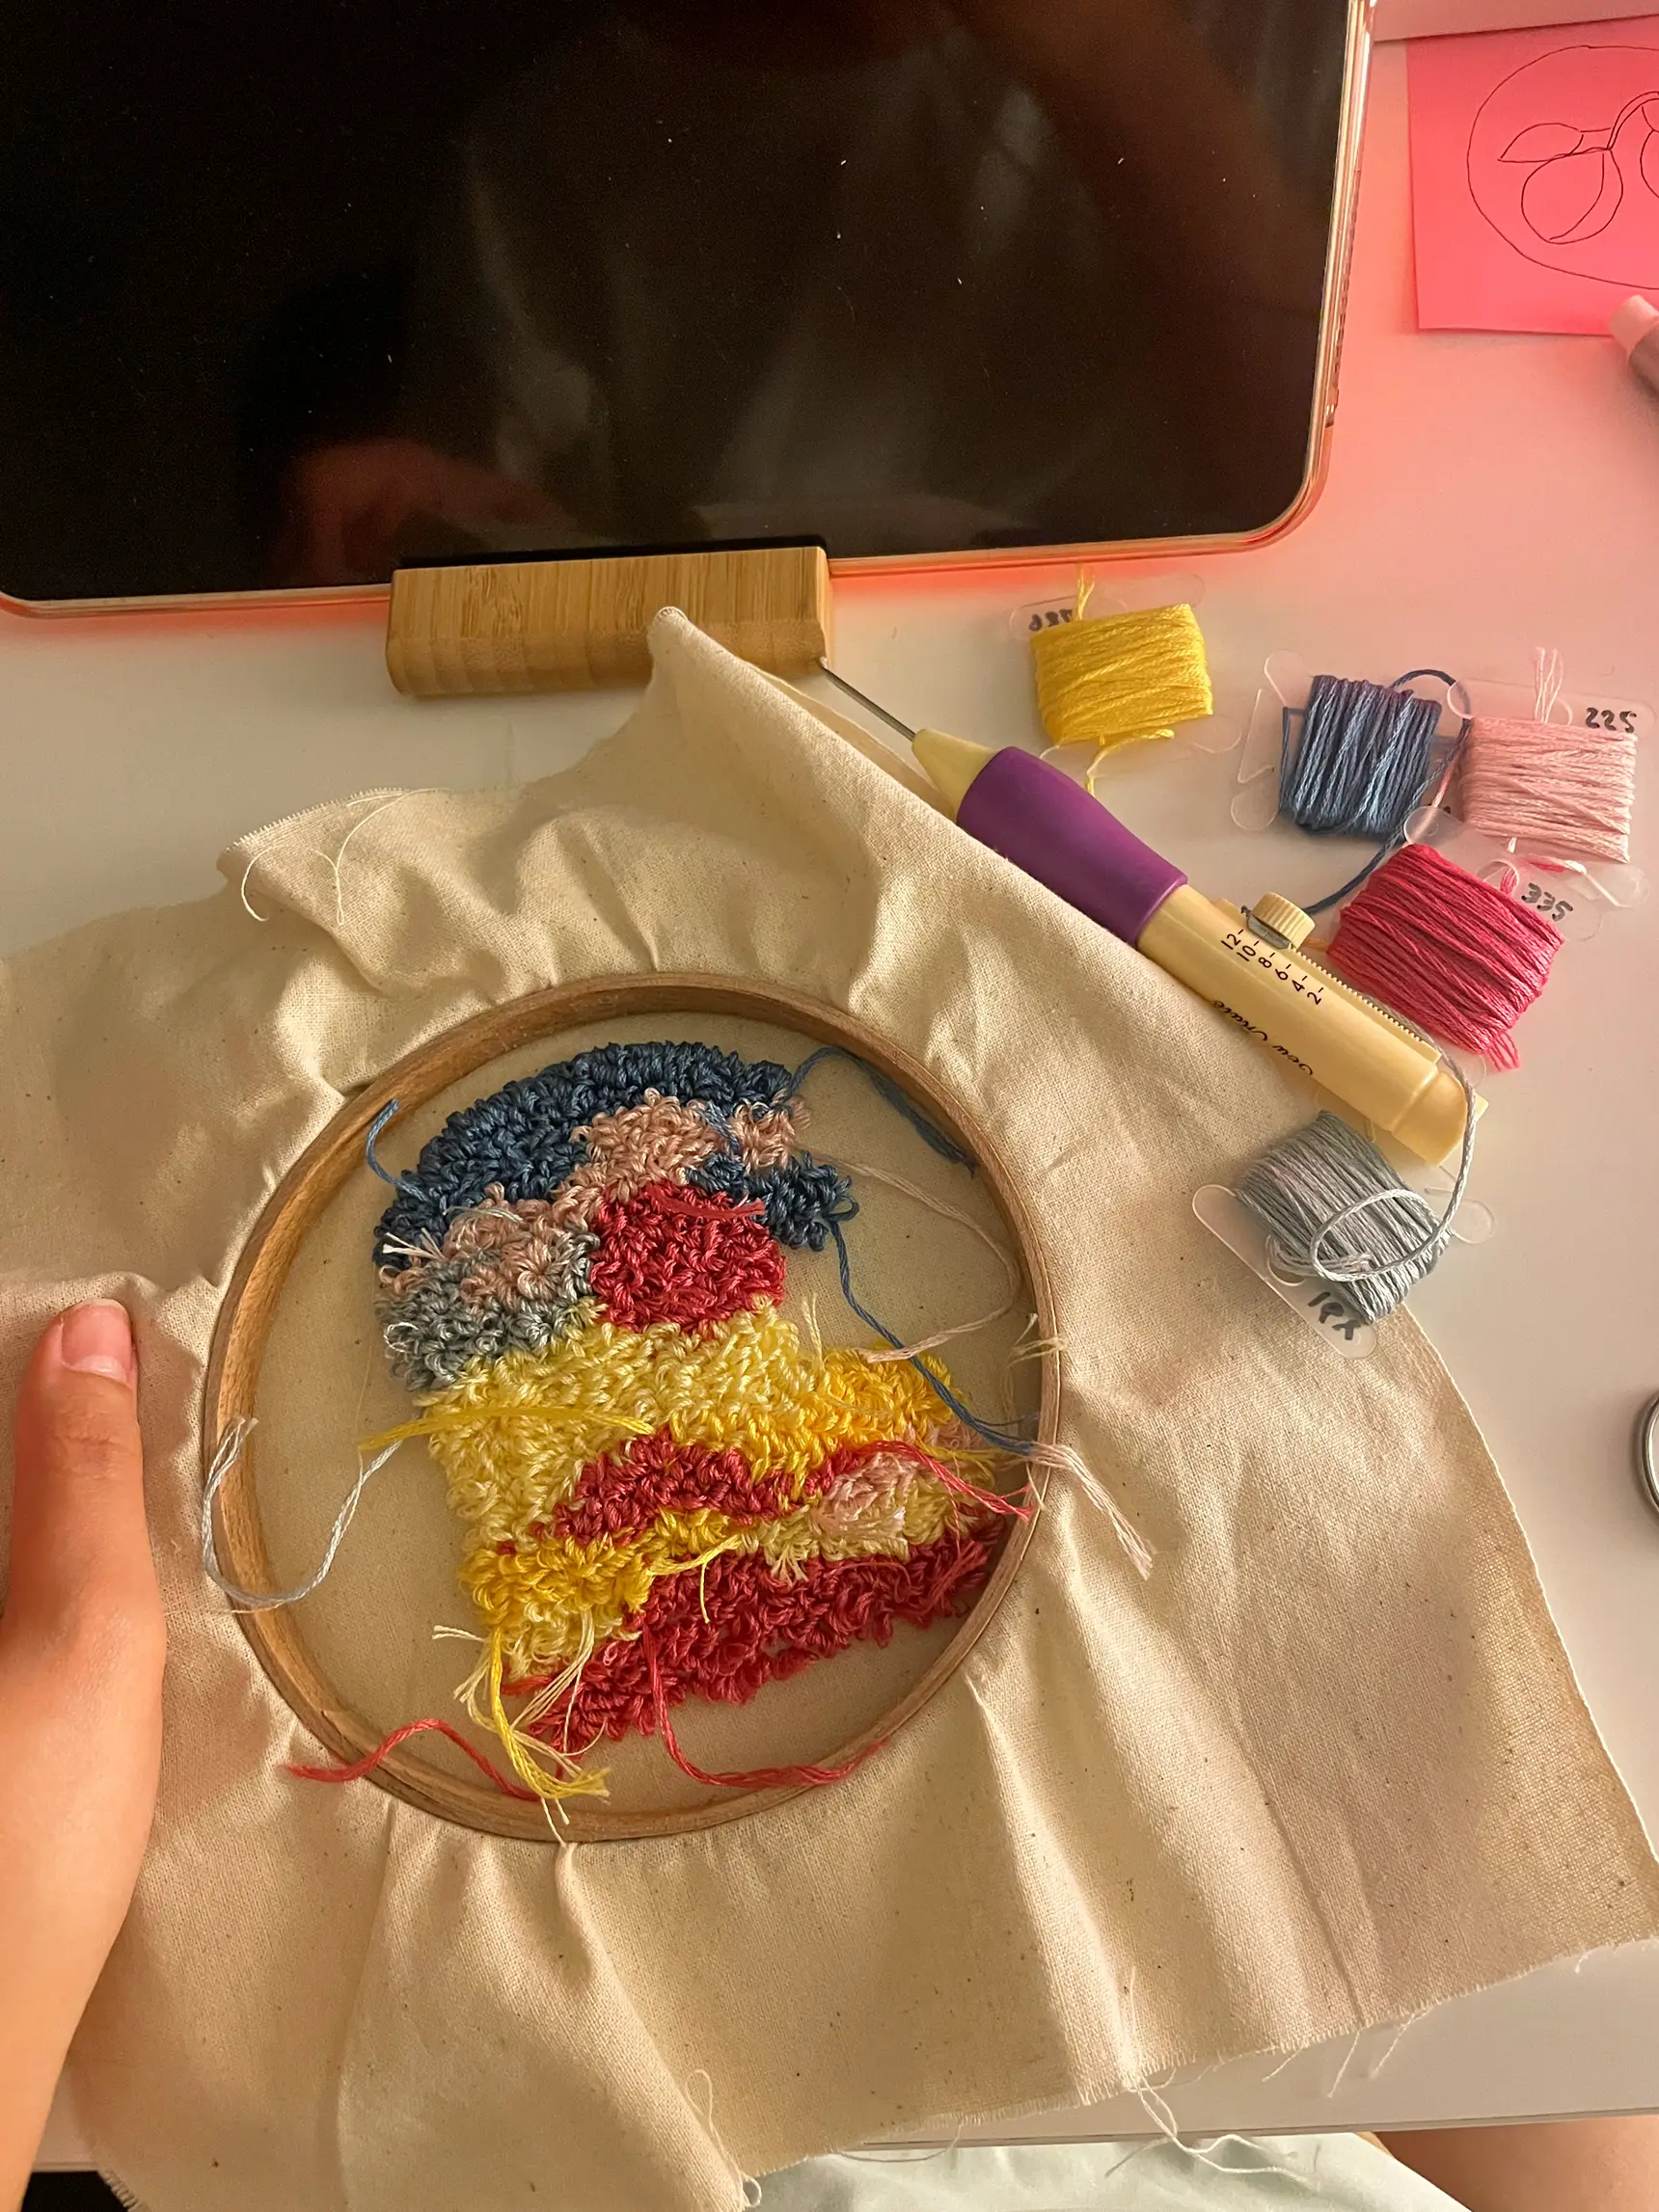 Nurge Punchneedle Embroidery Hoop ~ No. 6 – Hobby House Needleworks